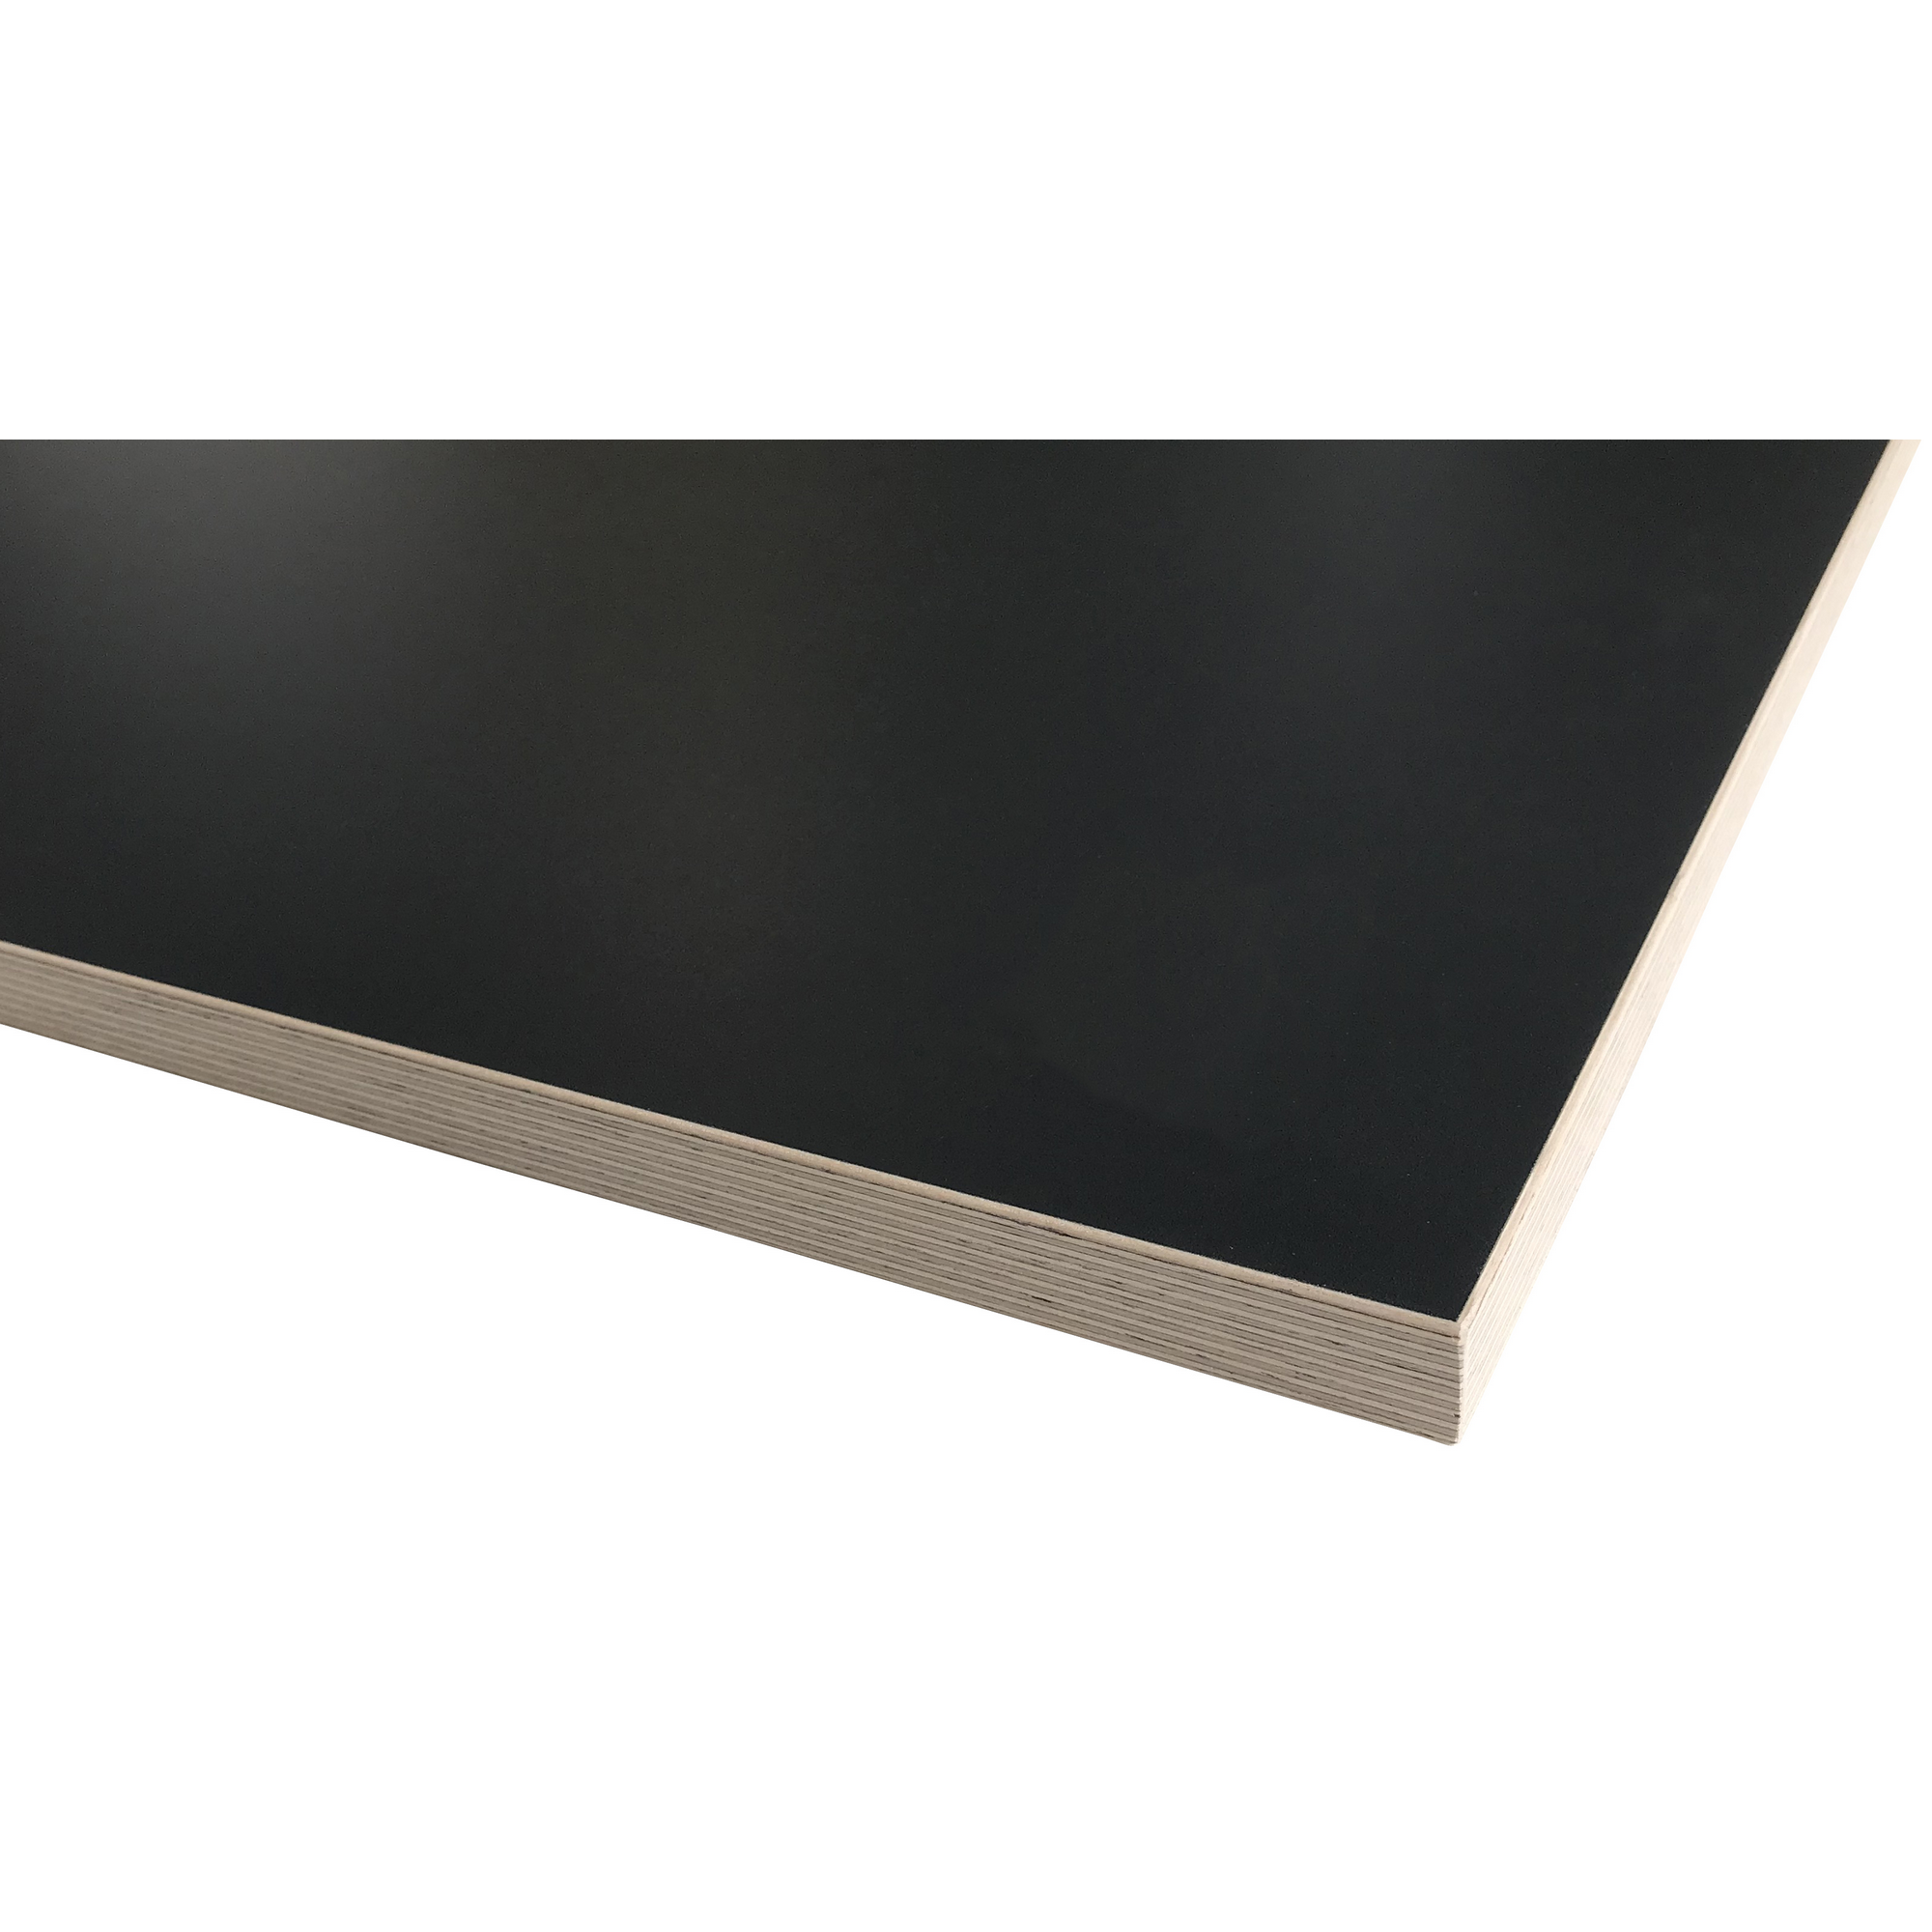 Tischplatte Dekorspan anthrazit 160 x 80 x 2,5 cm + product picture